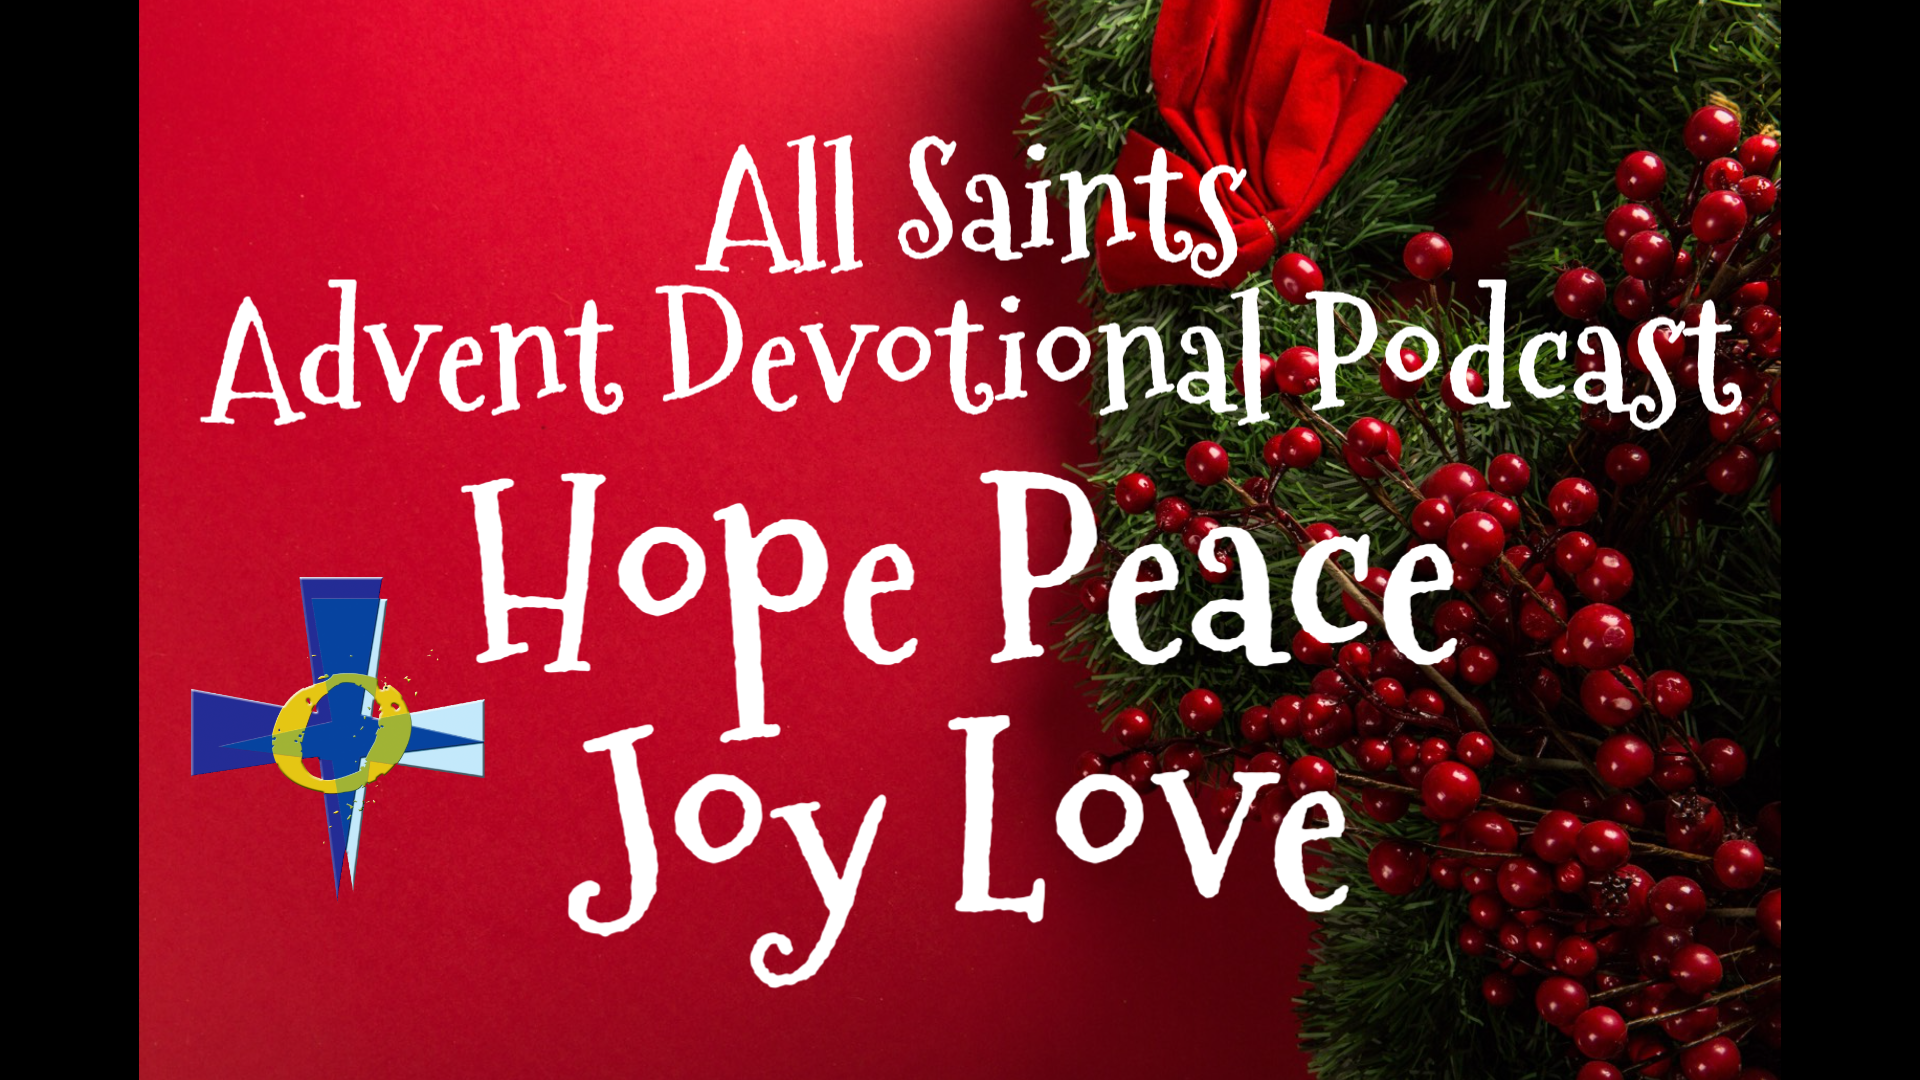 Advent Devotional Podcast - Joy